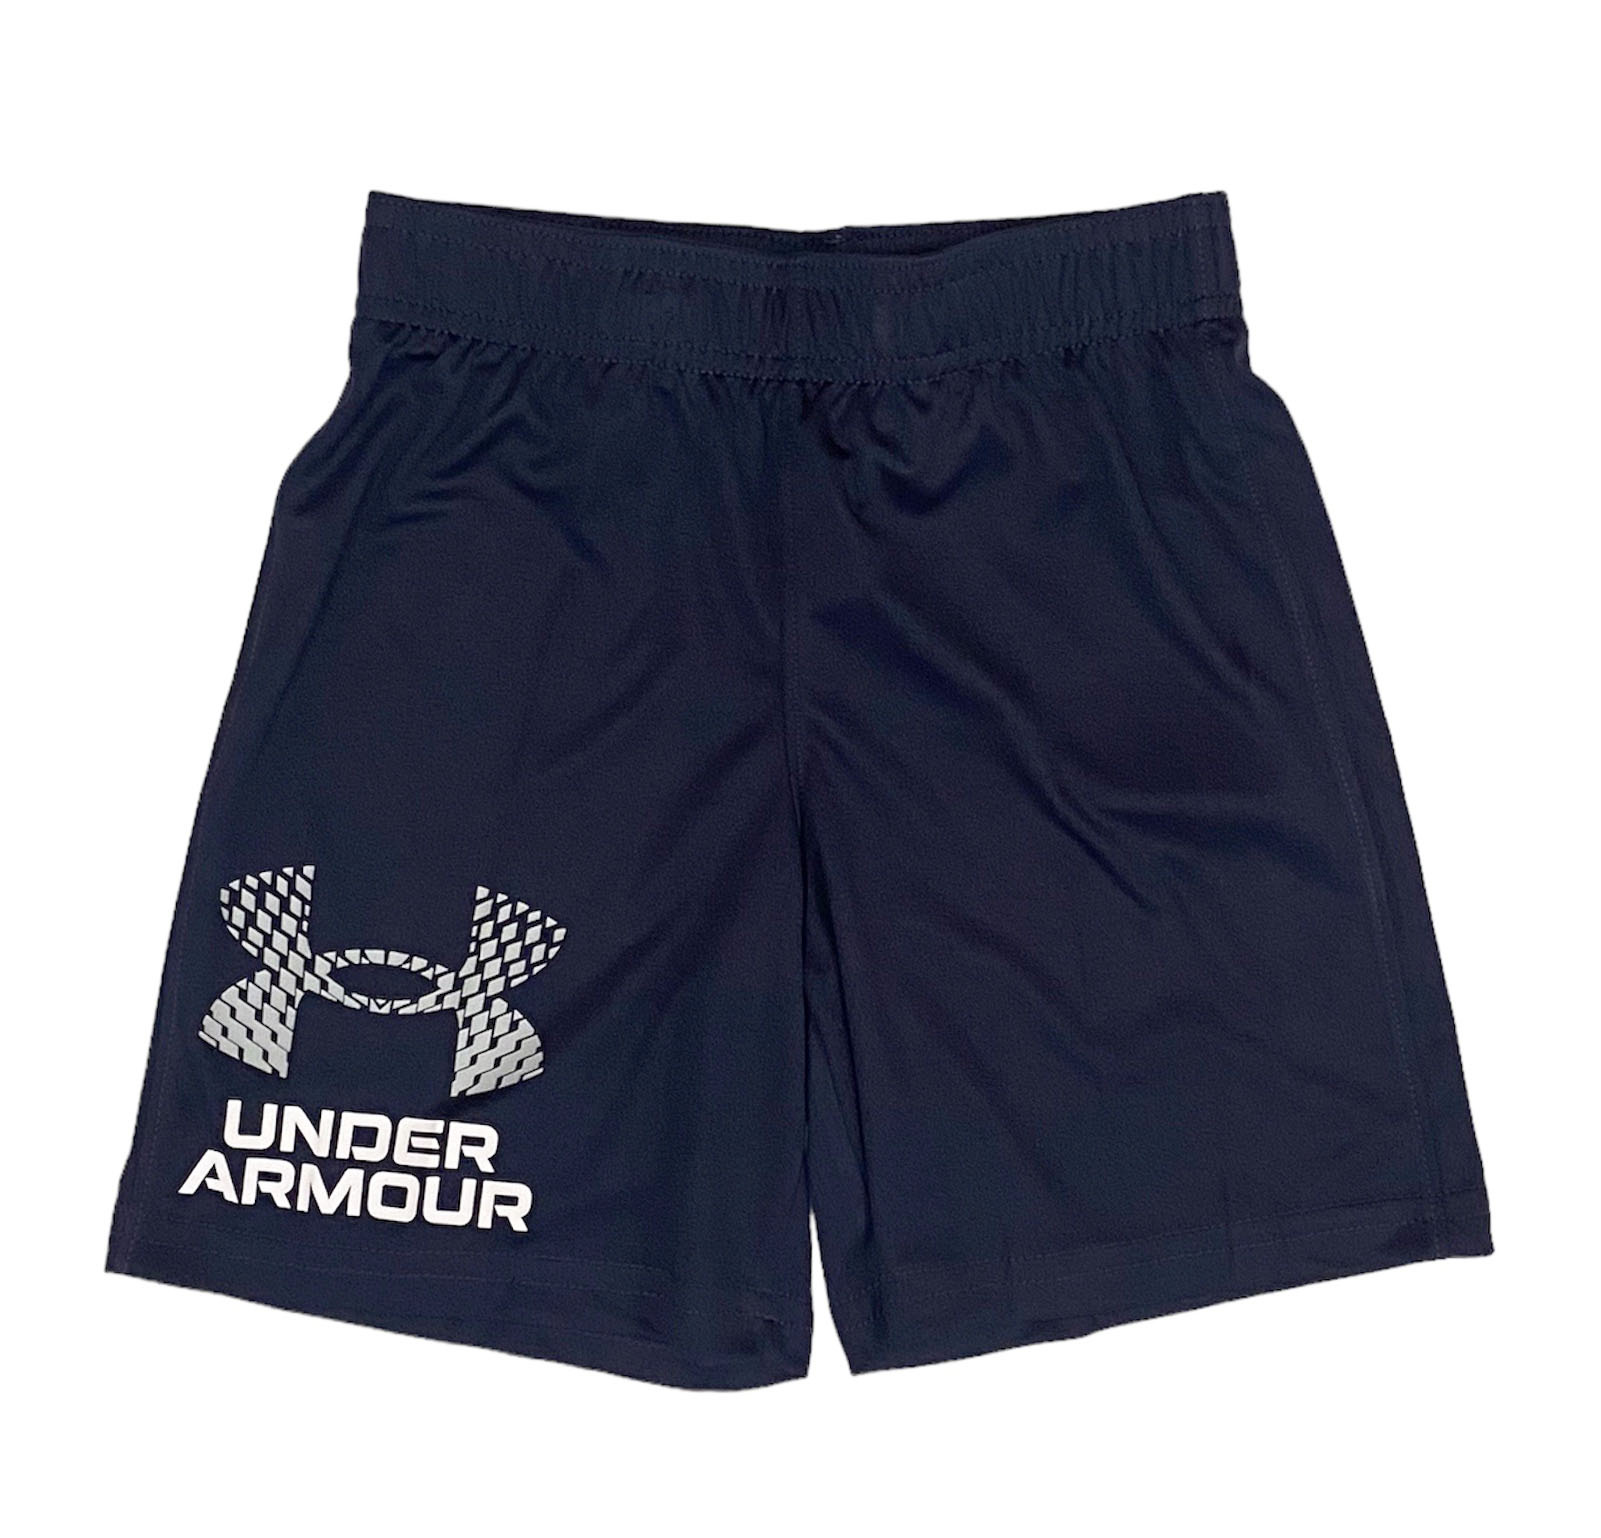 Under Armour Navy/Grey Logo Shorts